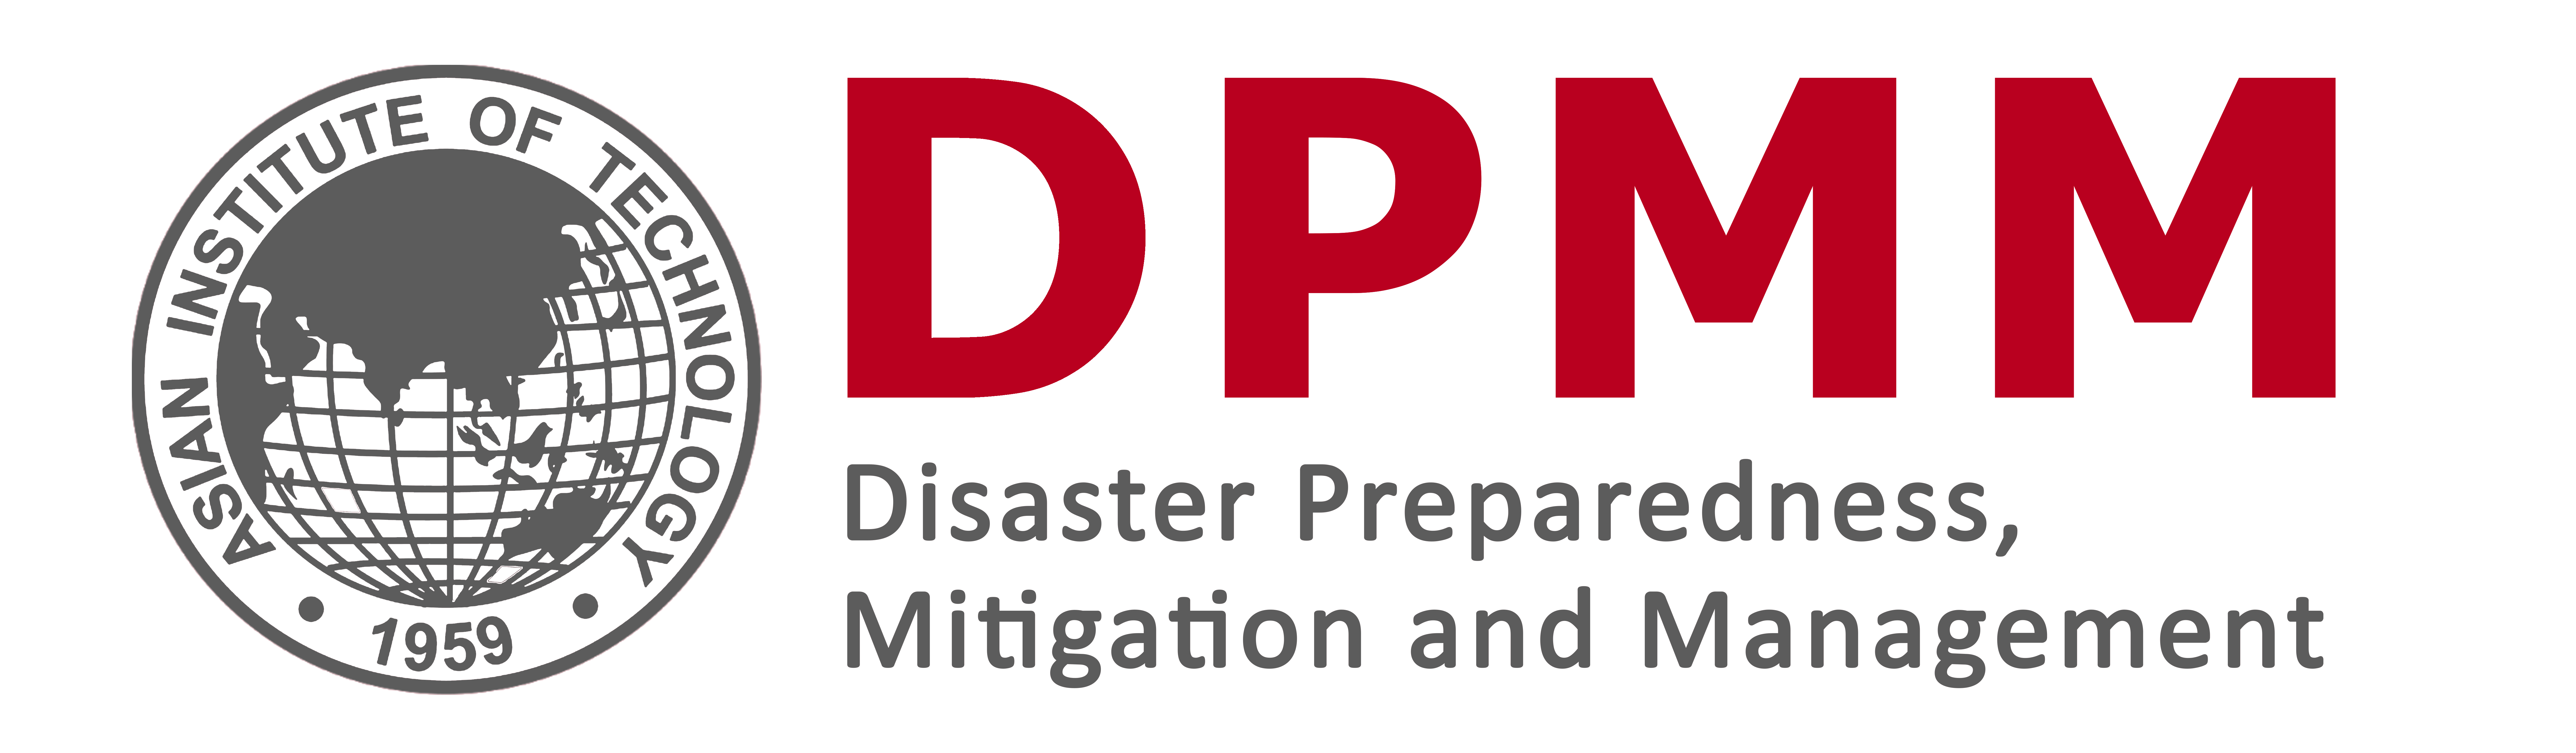 Disaster Preparedness, Mitigation, and Management